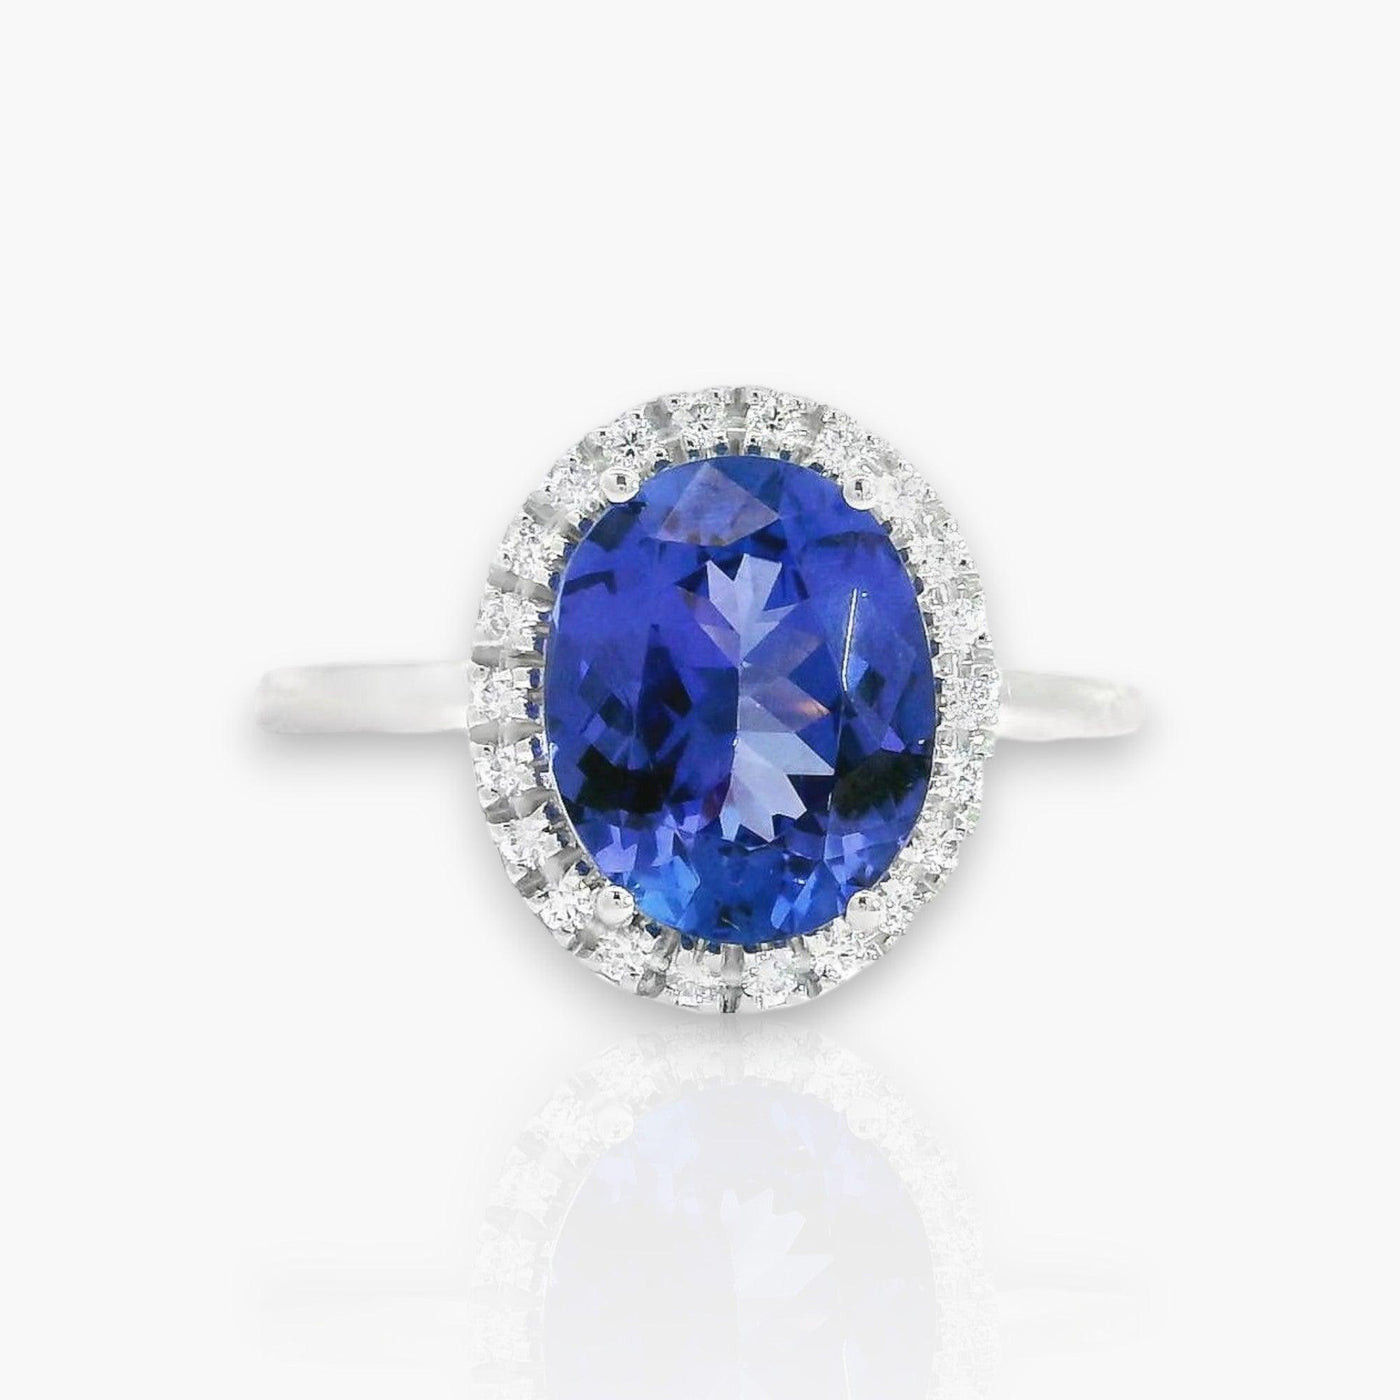 Oval blue Tanzanite Ring with Diamonds - Moregola Fine Jewelry